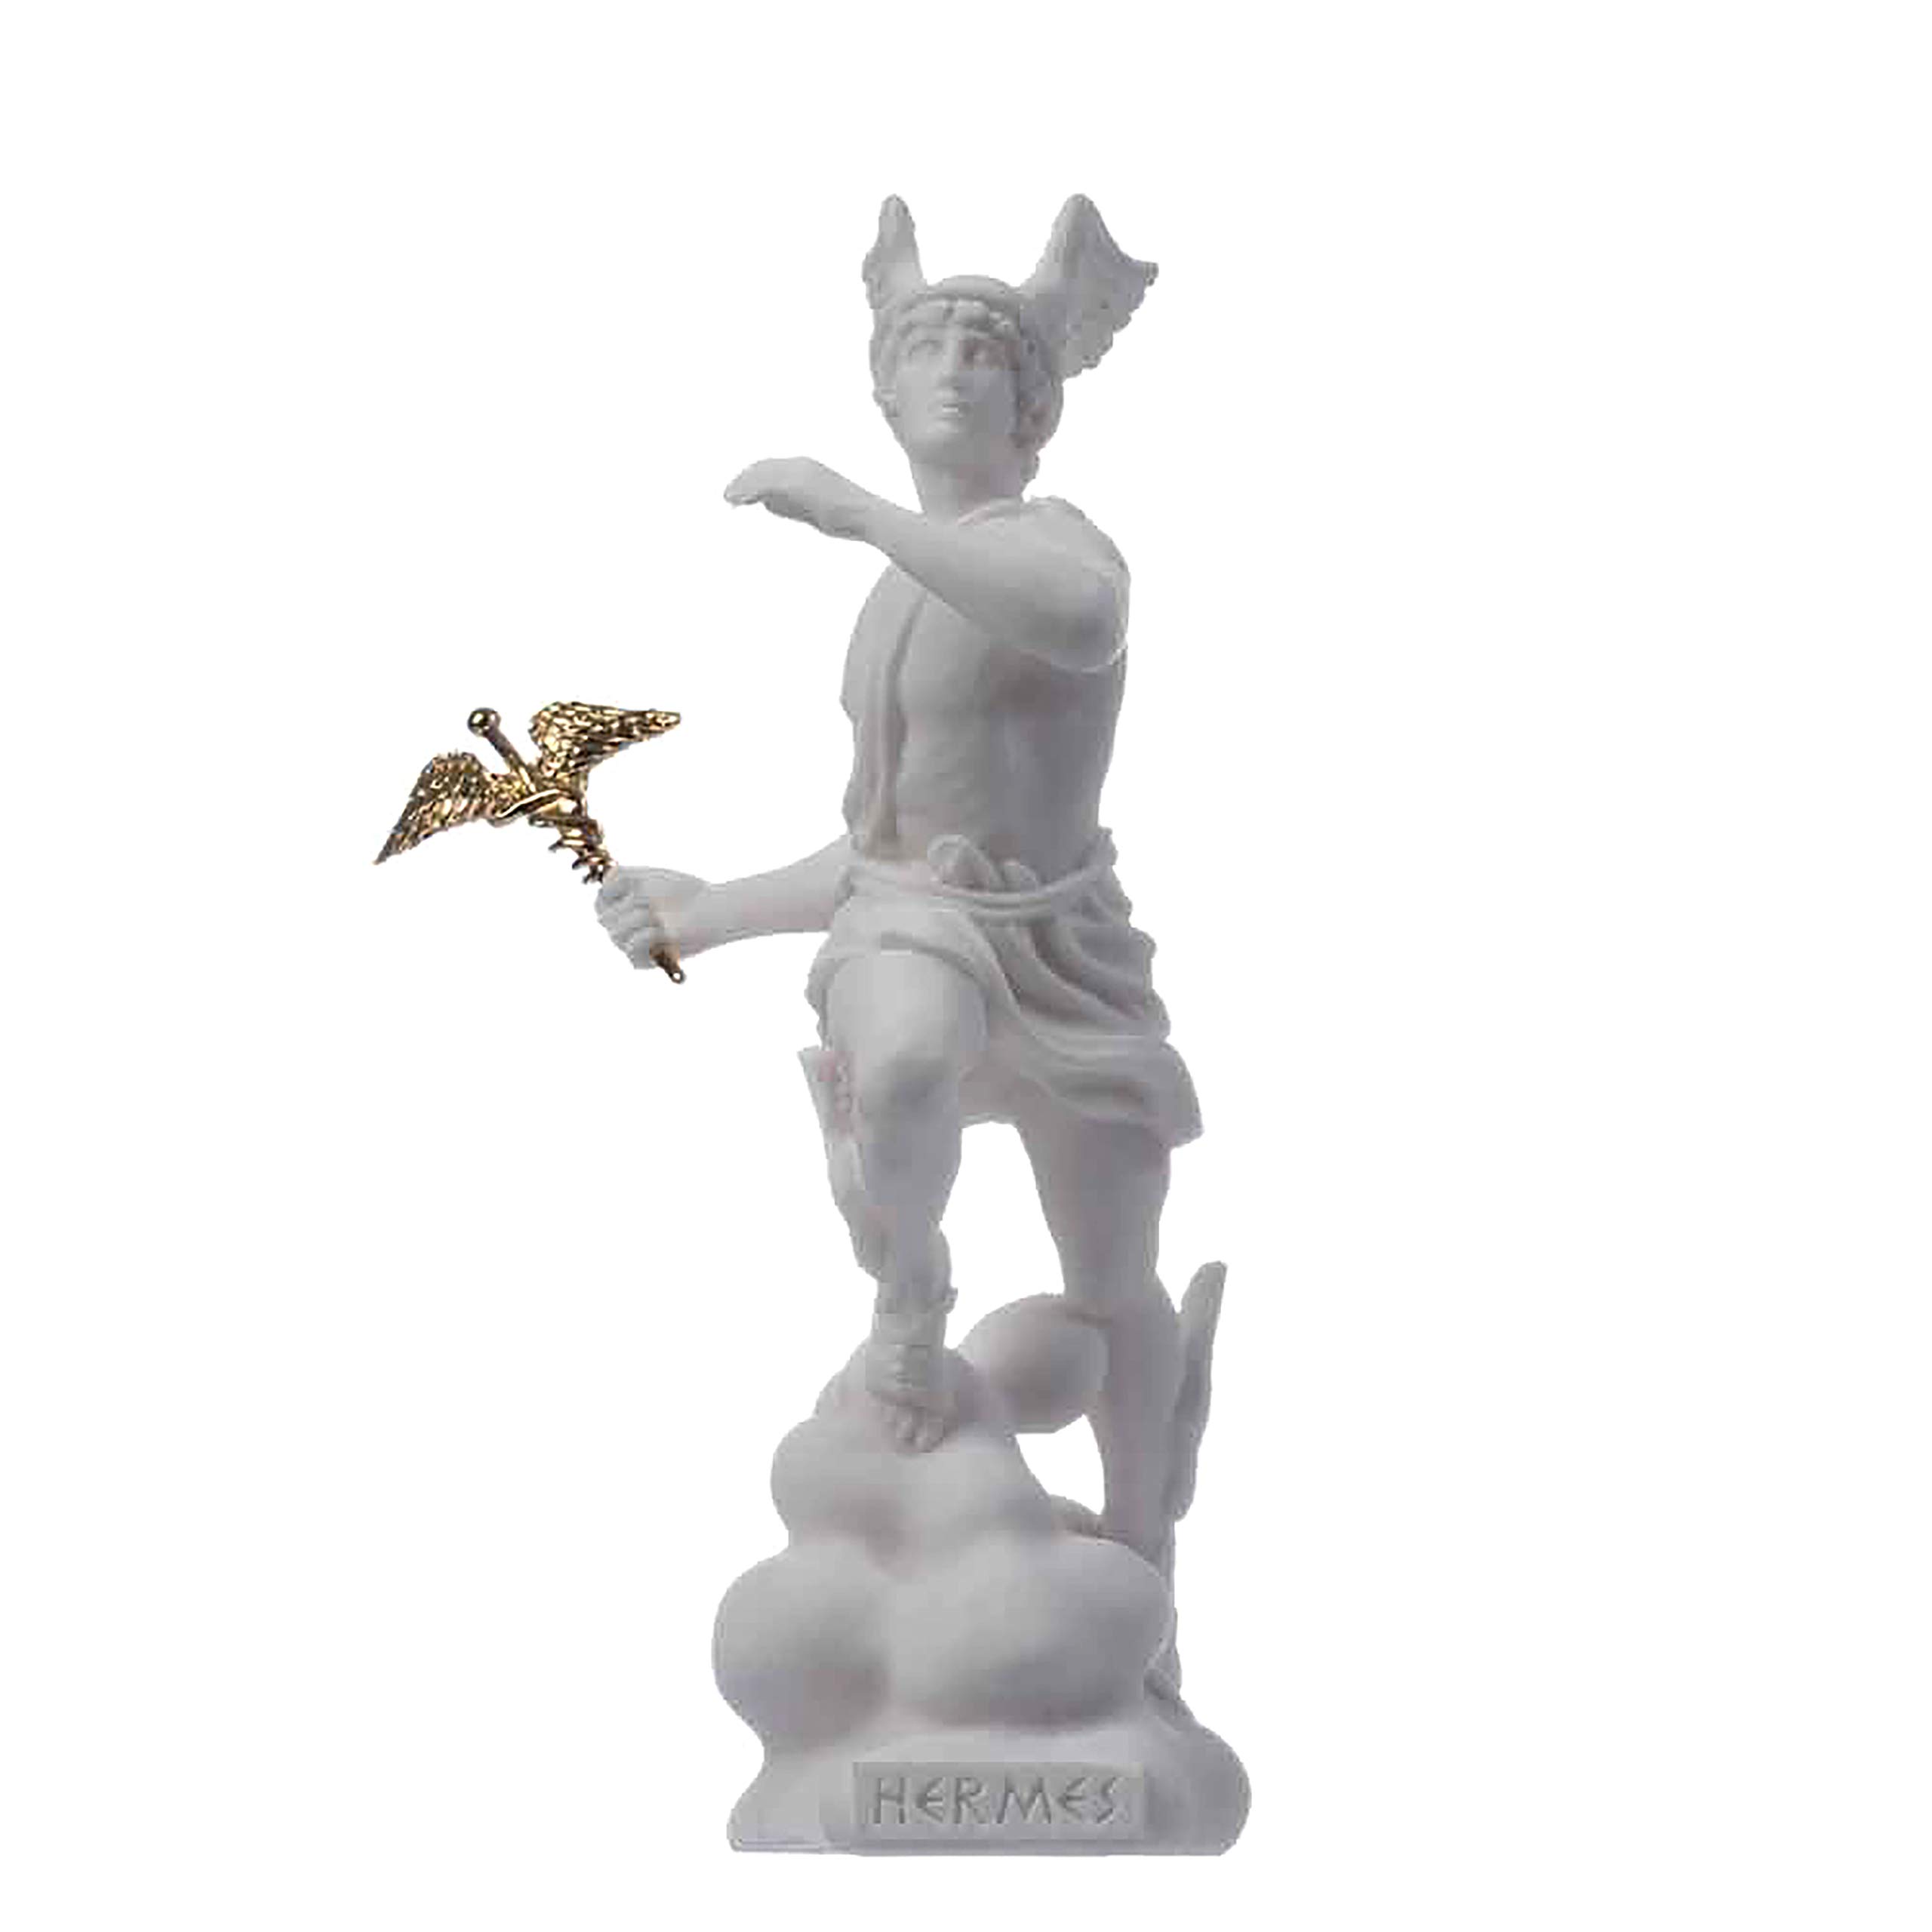 Hermes Mercury God Zeus Son Roman Statue Alabaster 6.69"